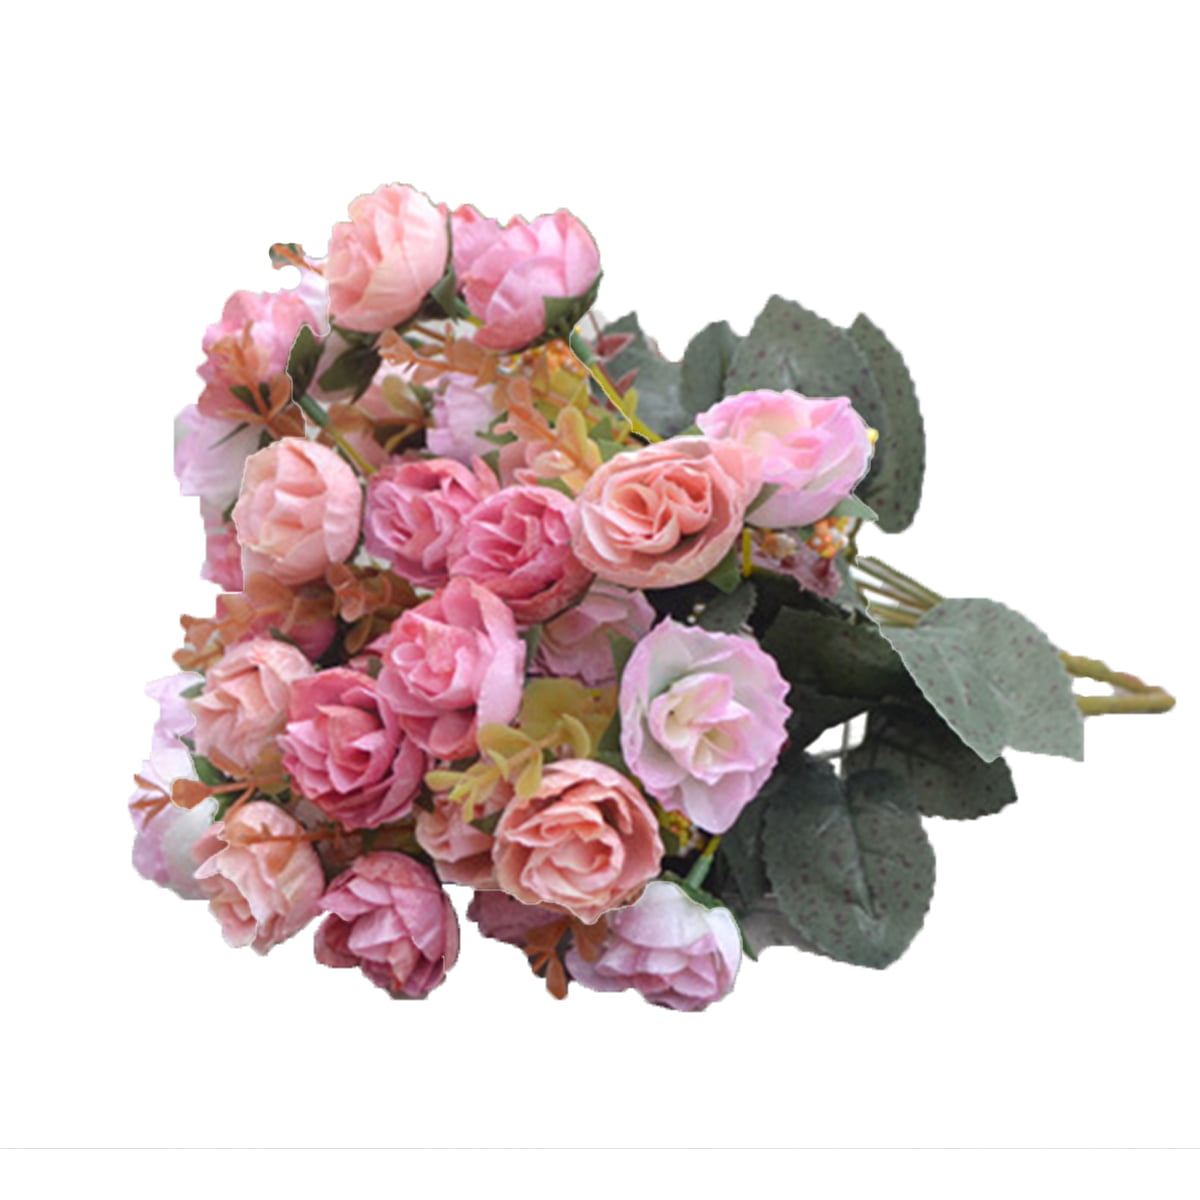 Details about  / Hot Atificial Flowers Wedding Decoration Decoration for Home DIY Plastic Bouquet